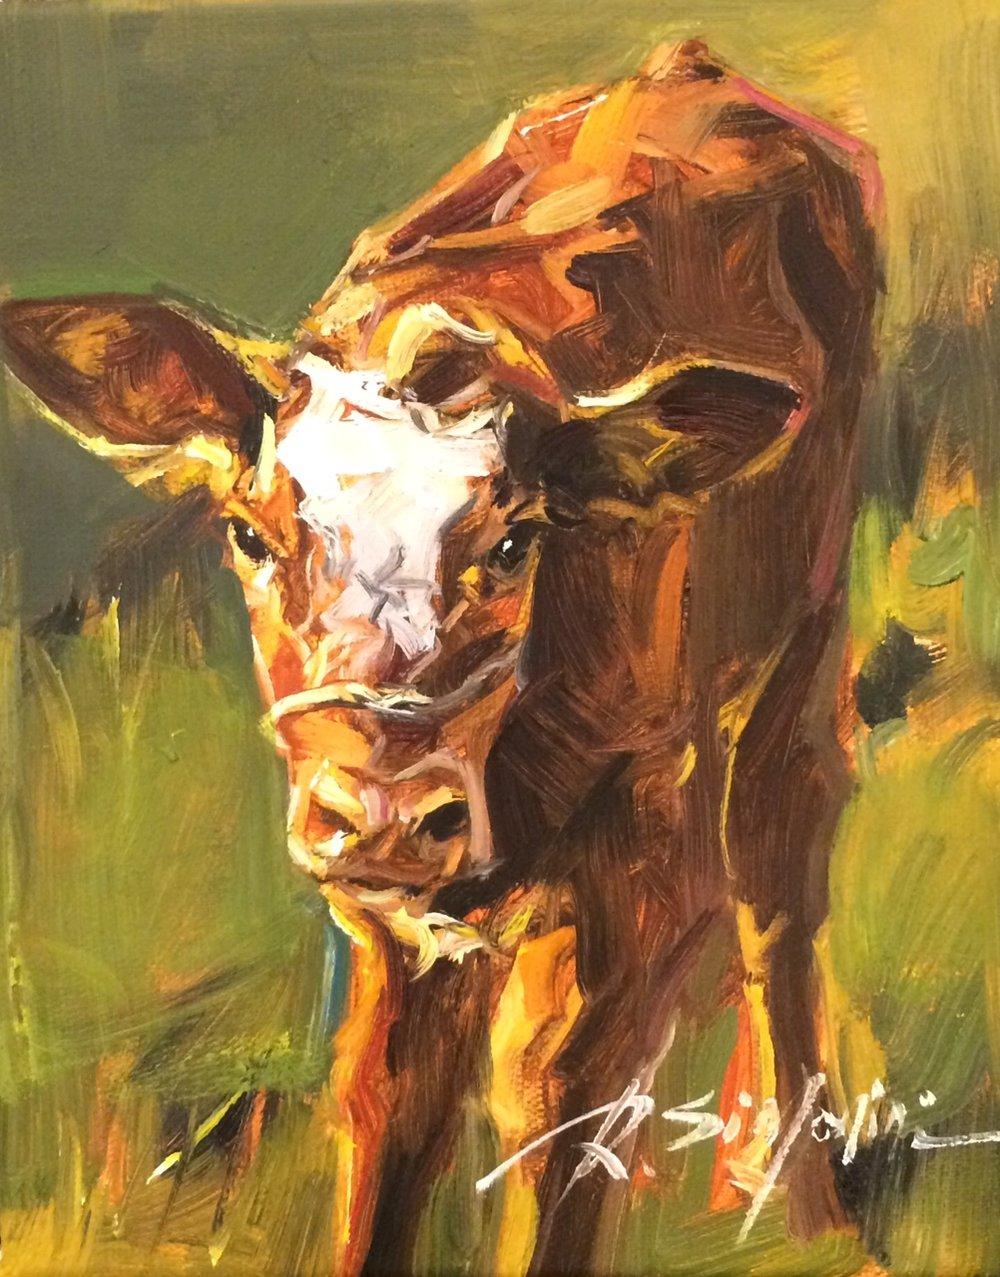 Ray Simonini, "Cinnamon" 10x8 Impressionist Brown Cow Farm Animal Oil Painting 